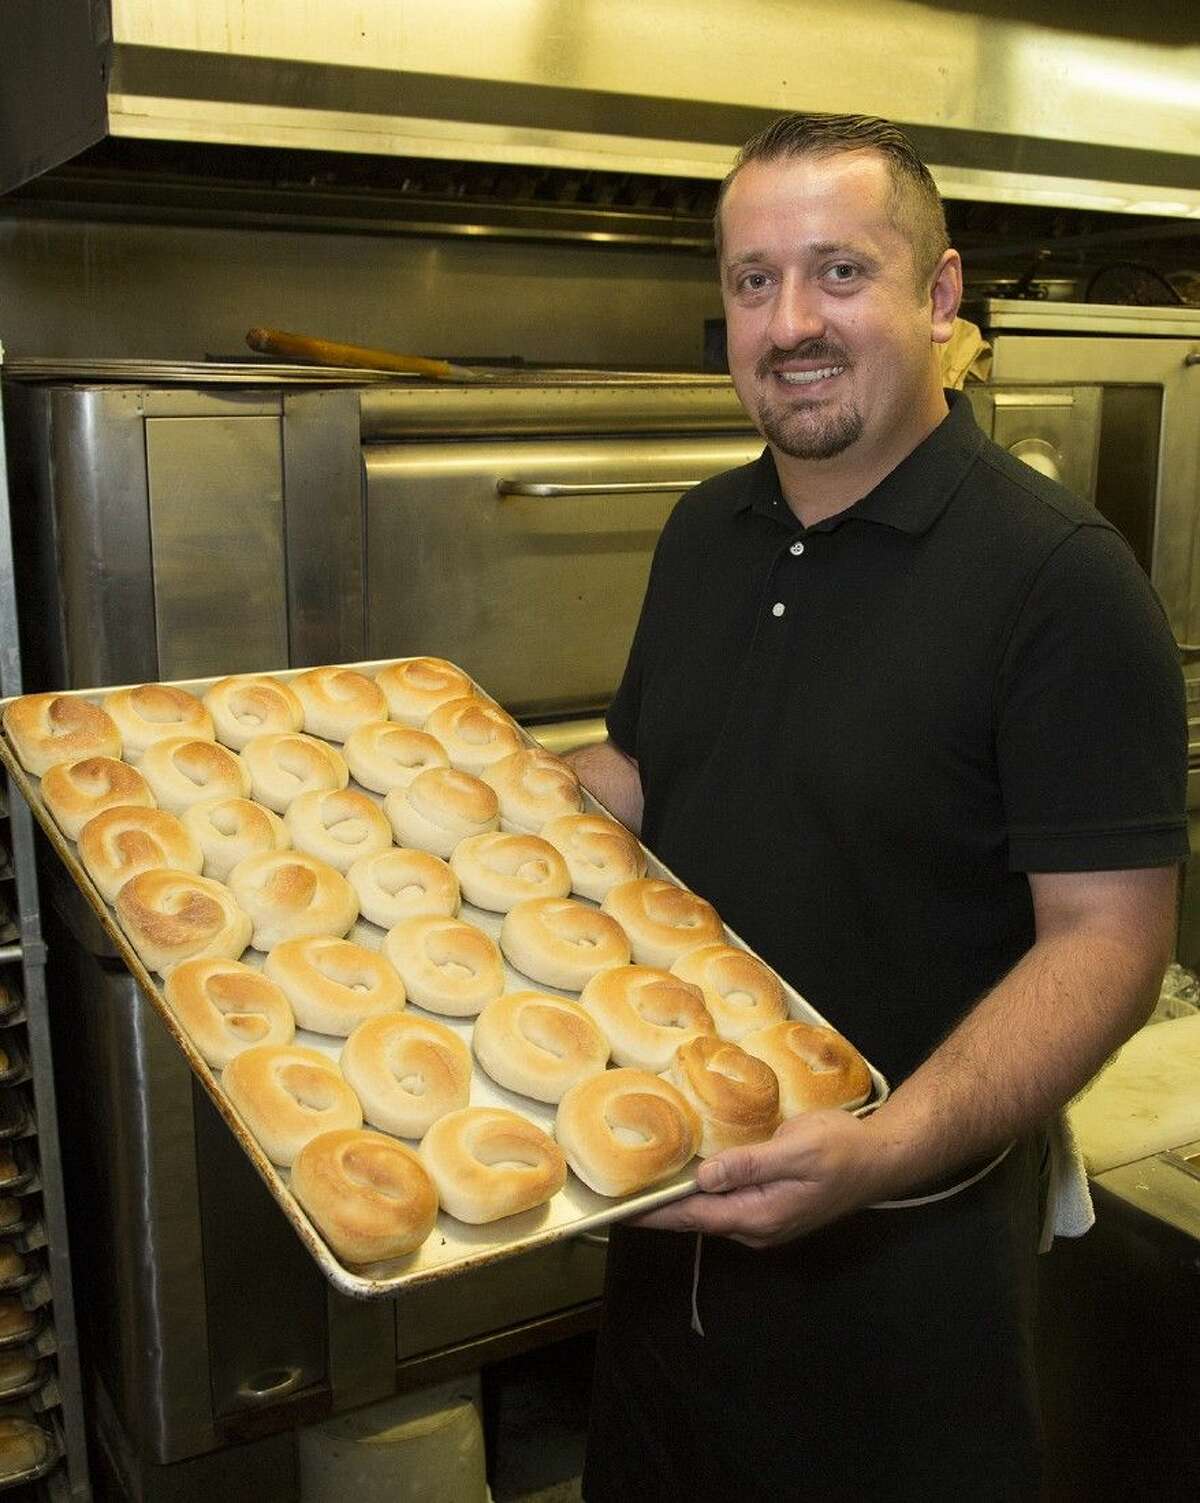 Joe Haliti, owner of Joe’s Italian Restaurant in Conroe, displays a pan of his famous yeast rolls.